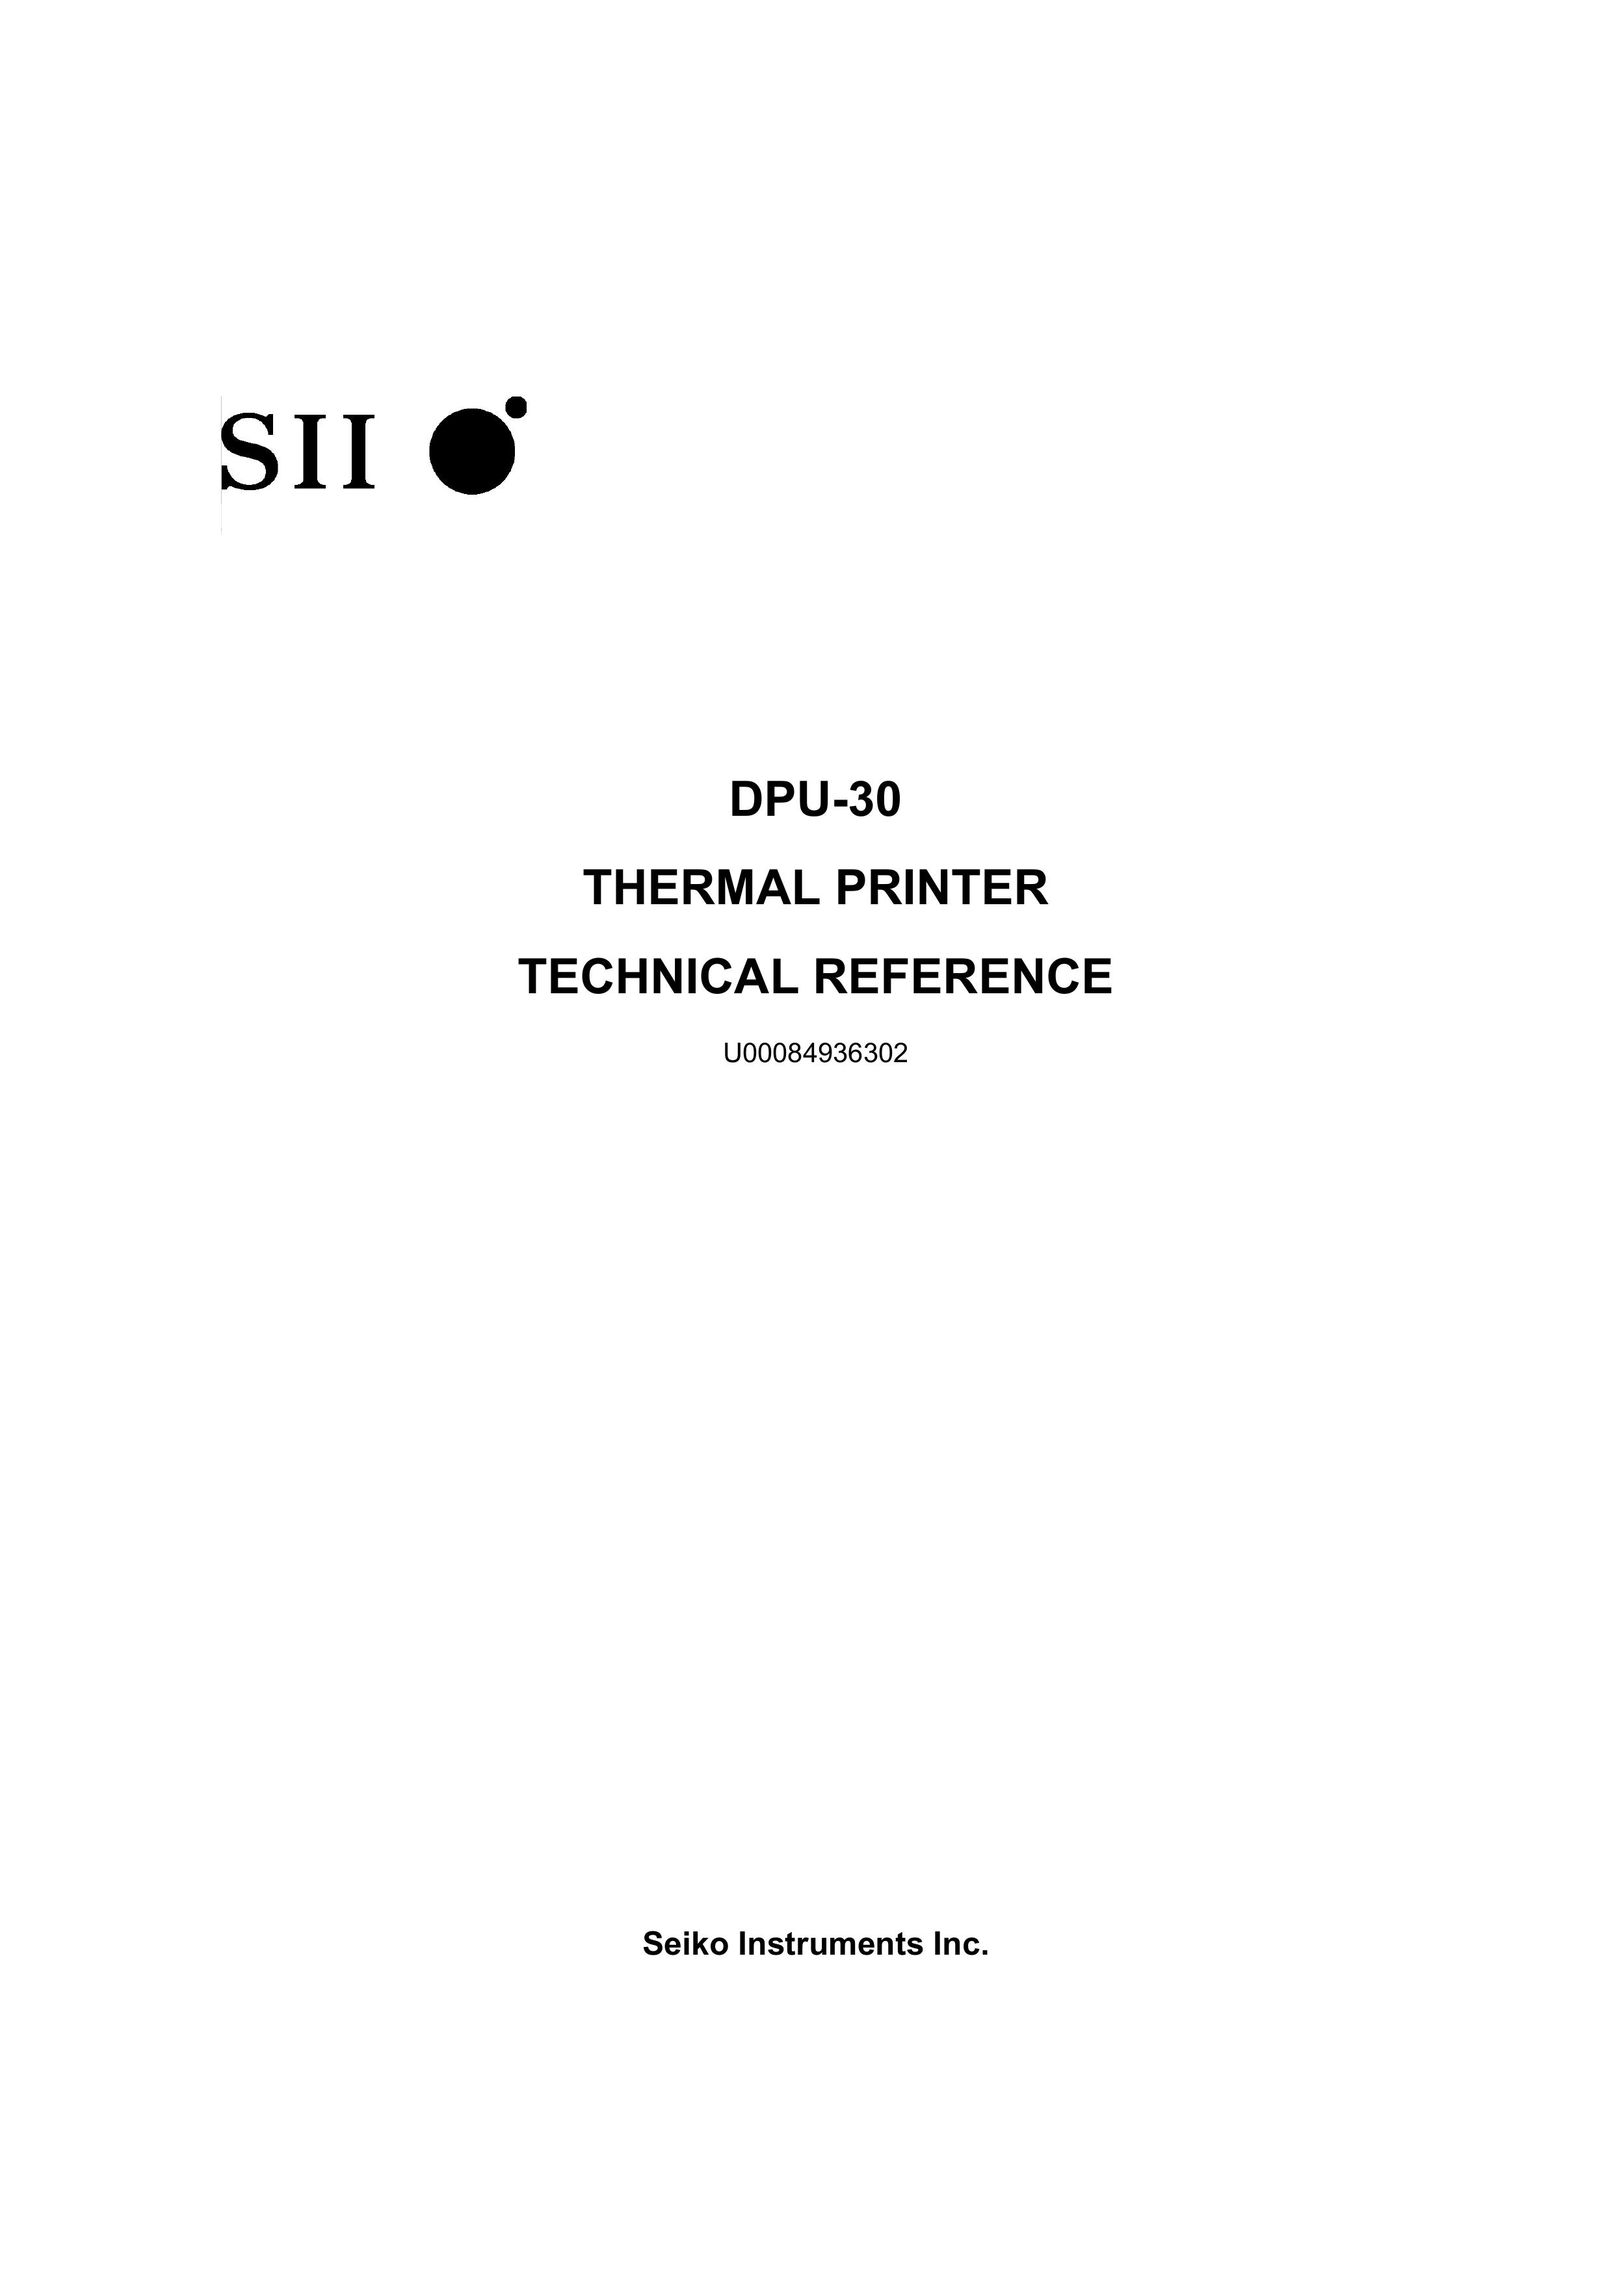 Seiko Instruments DPU-30 Printer User Manual